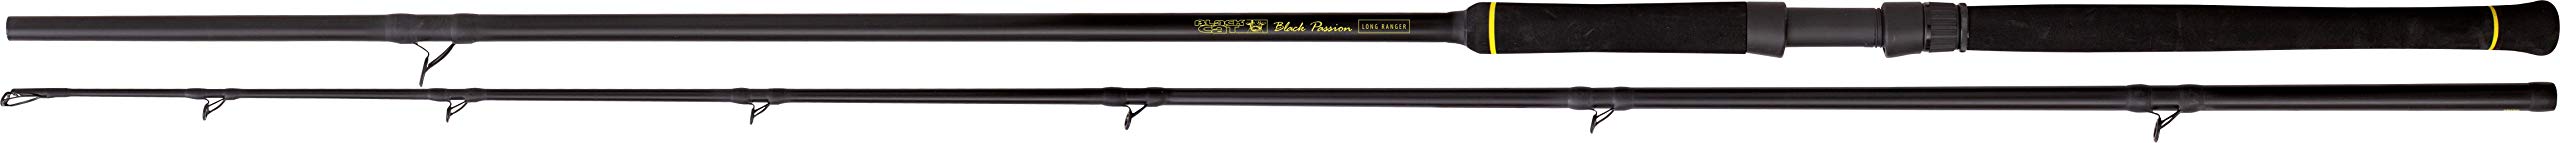 Blackcat Cat 3,30m Black Passion Long Ranger 600g, schwarz, 600 g